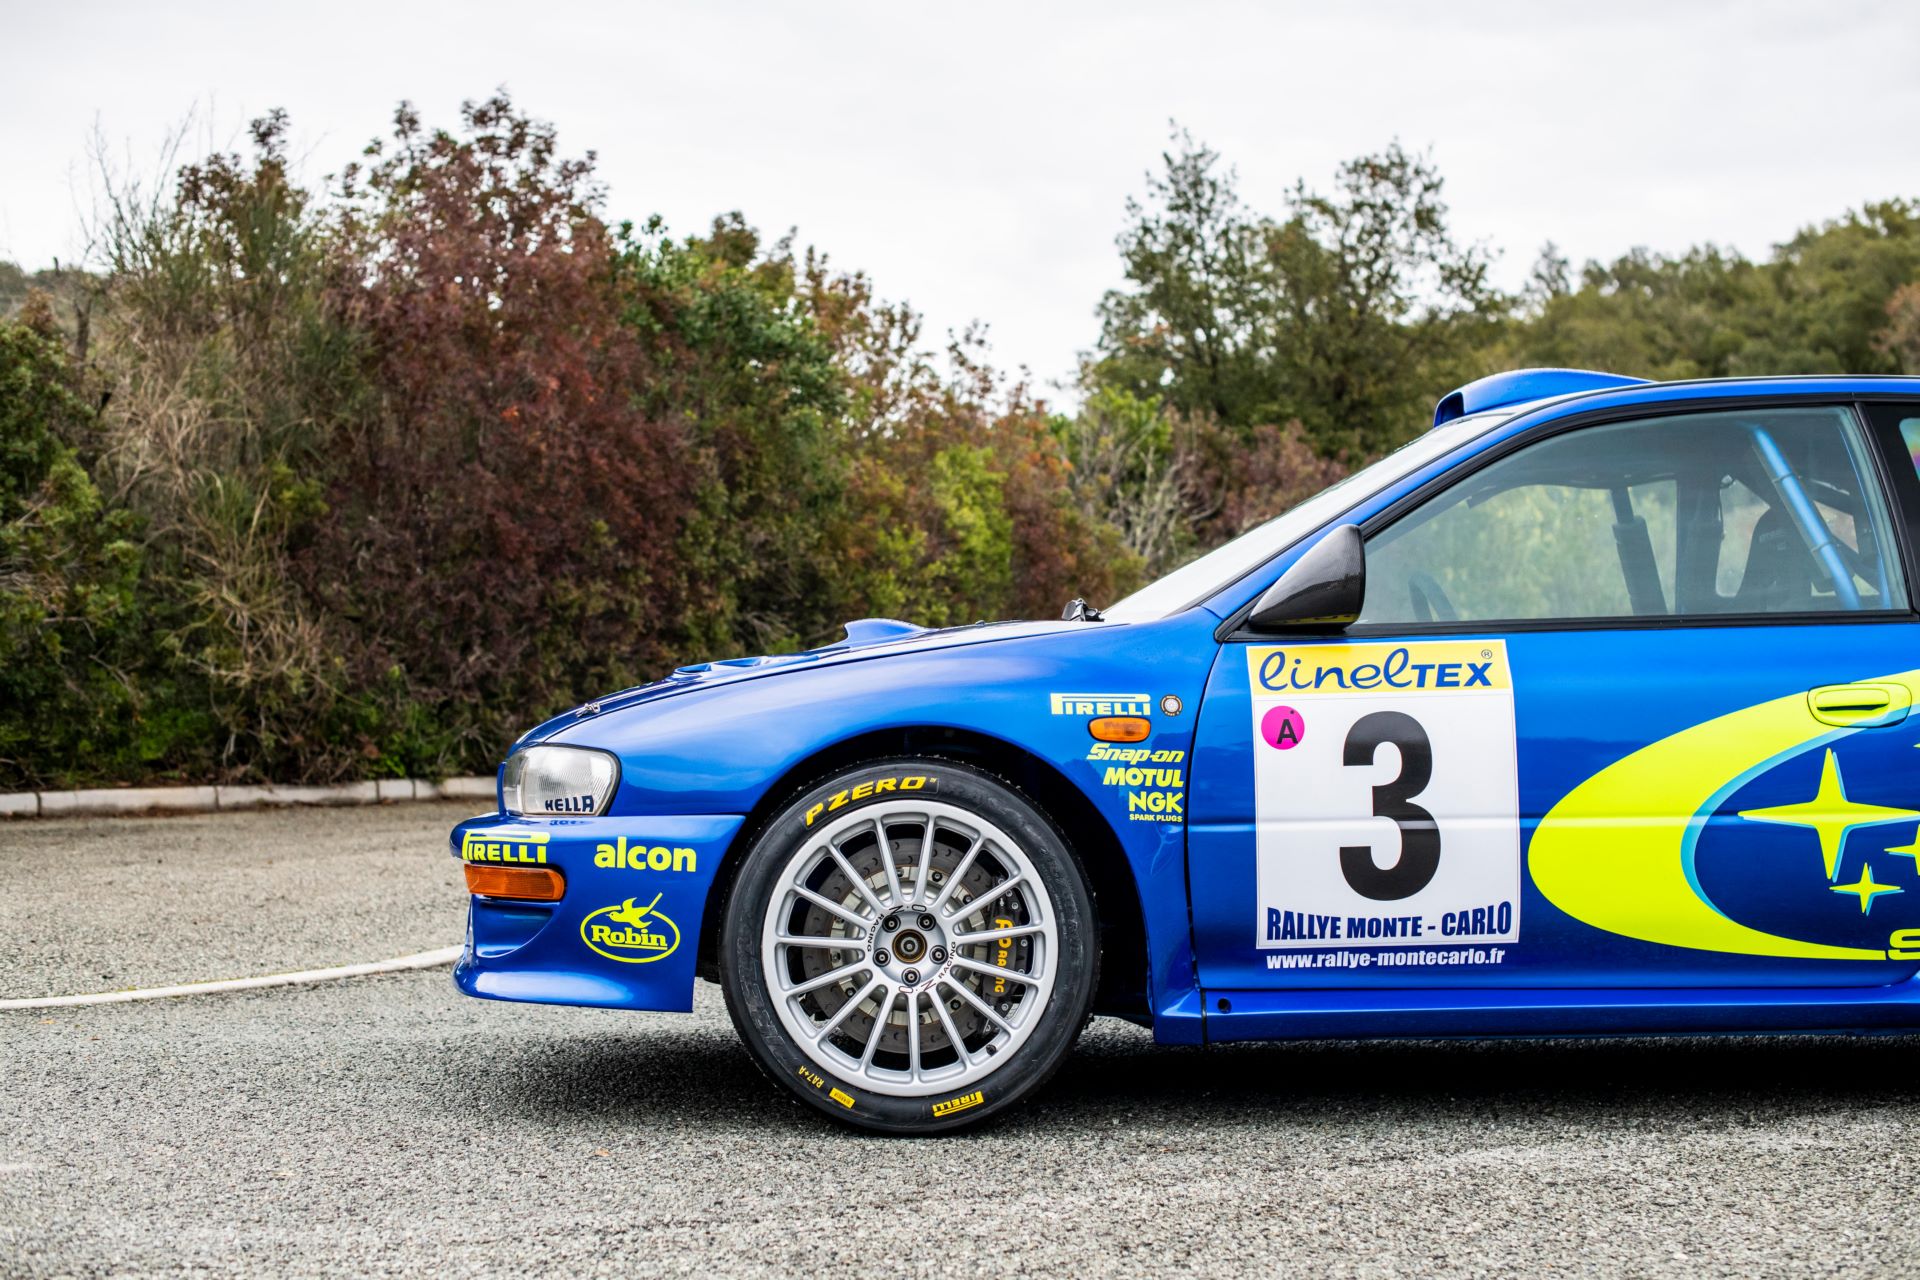 Subaru-Impreza-WRC-Richard-Burns-auction-142